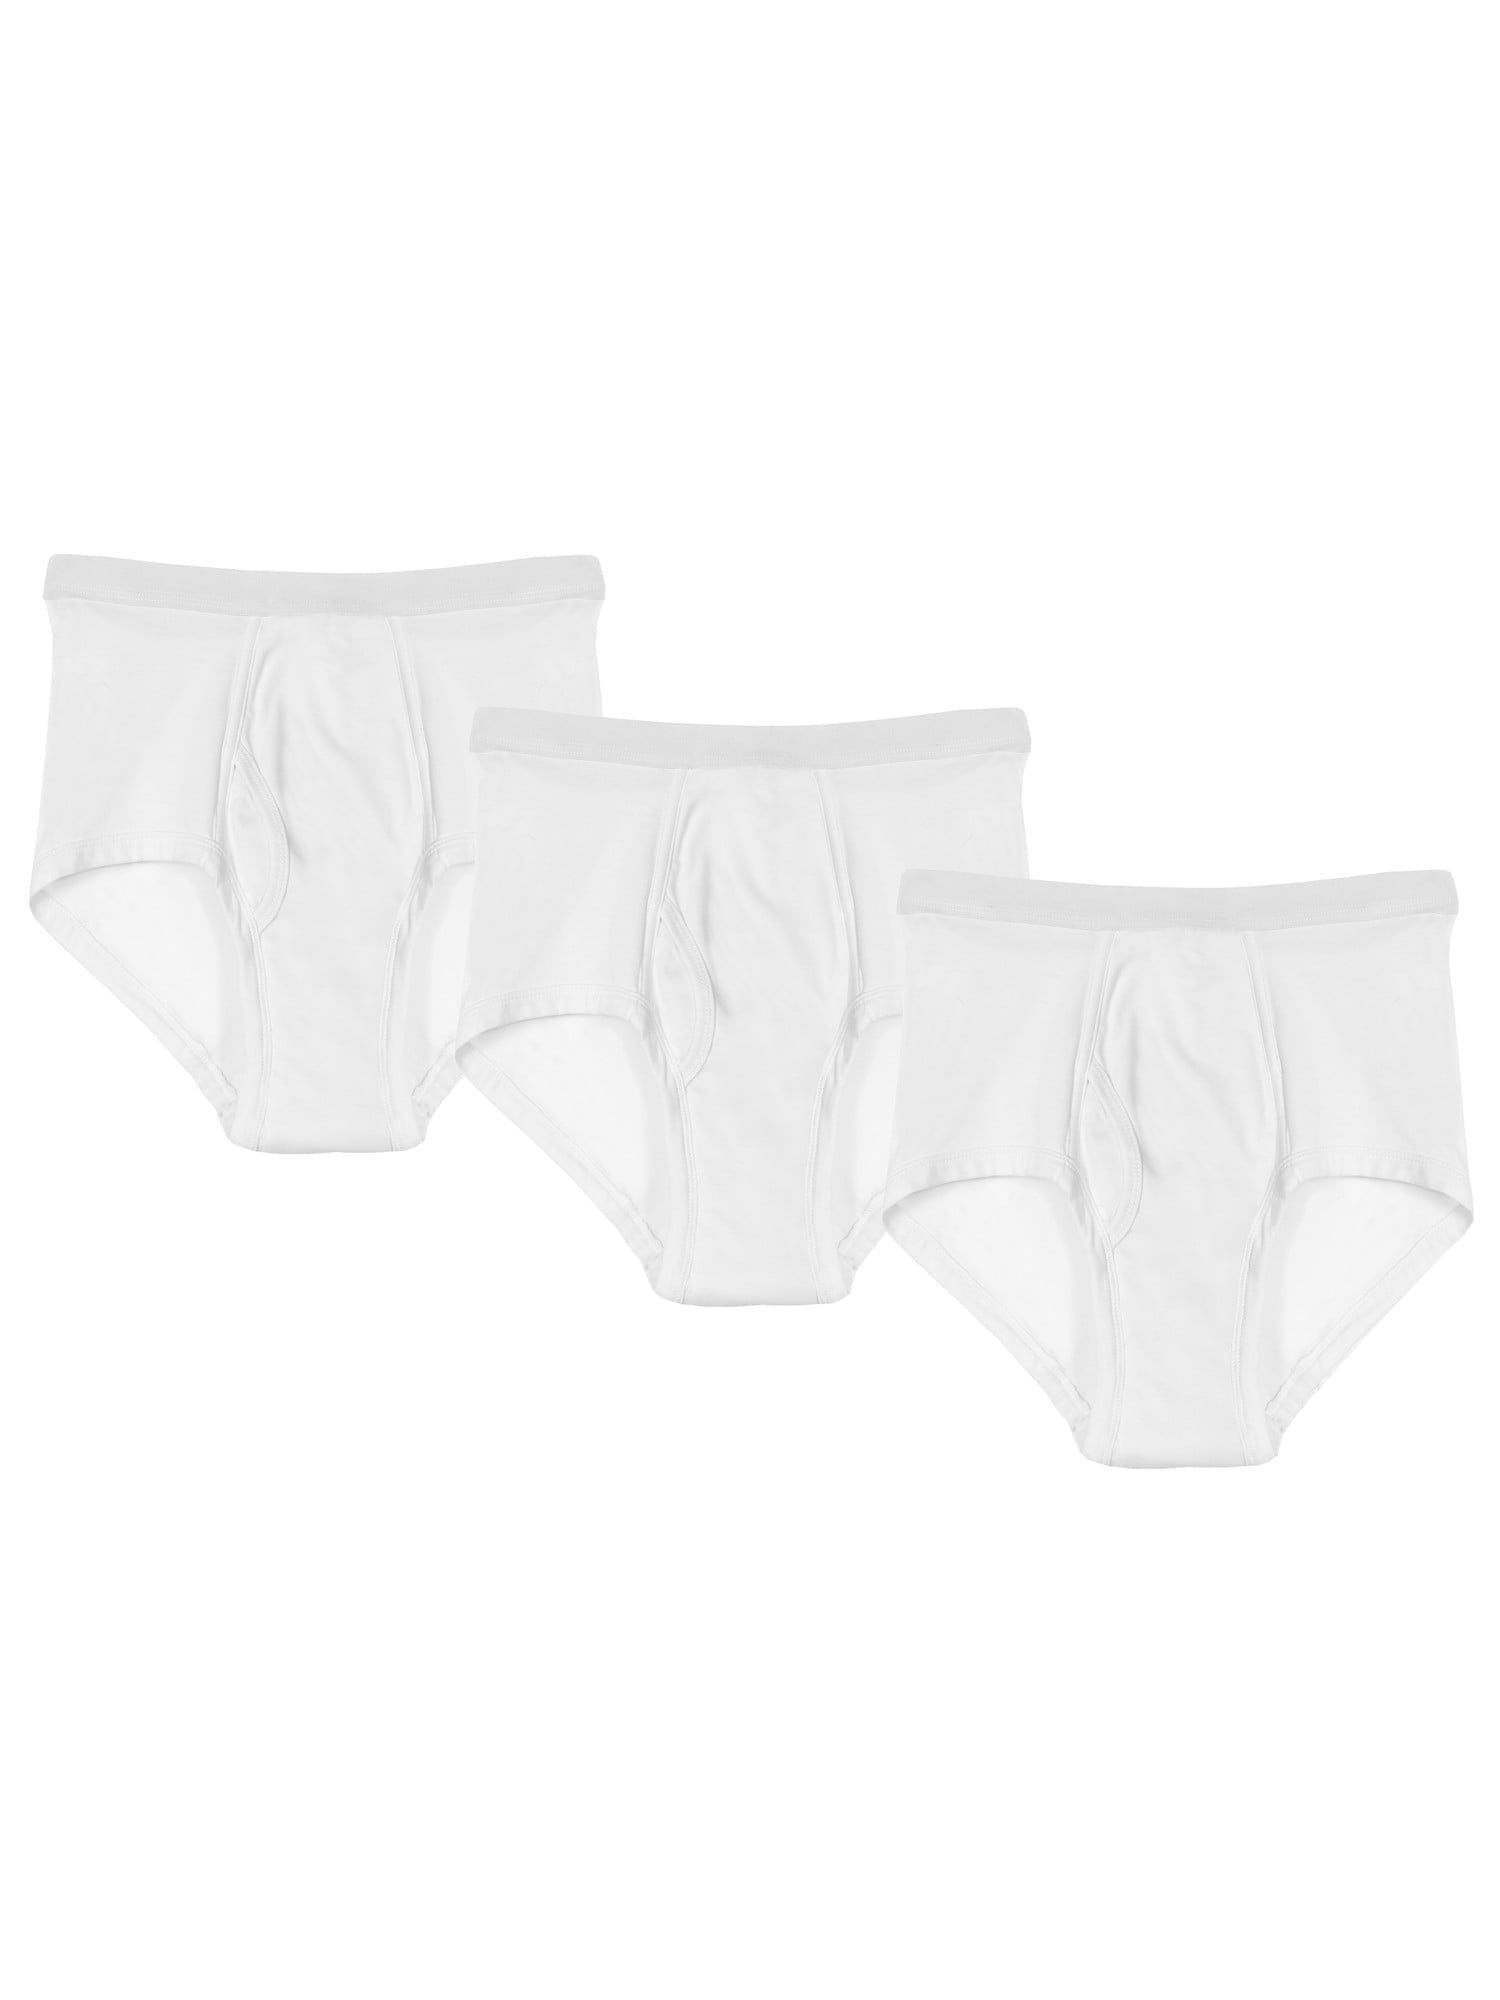 Mens Incontinence Underwear-3 Pk Washable Briefs Holds 20 Oz, White M ...